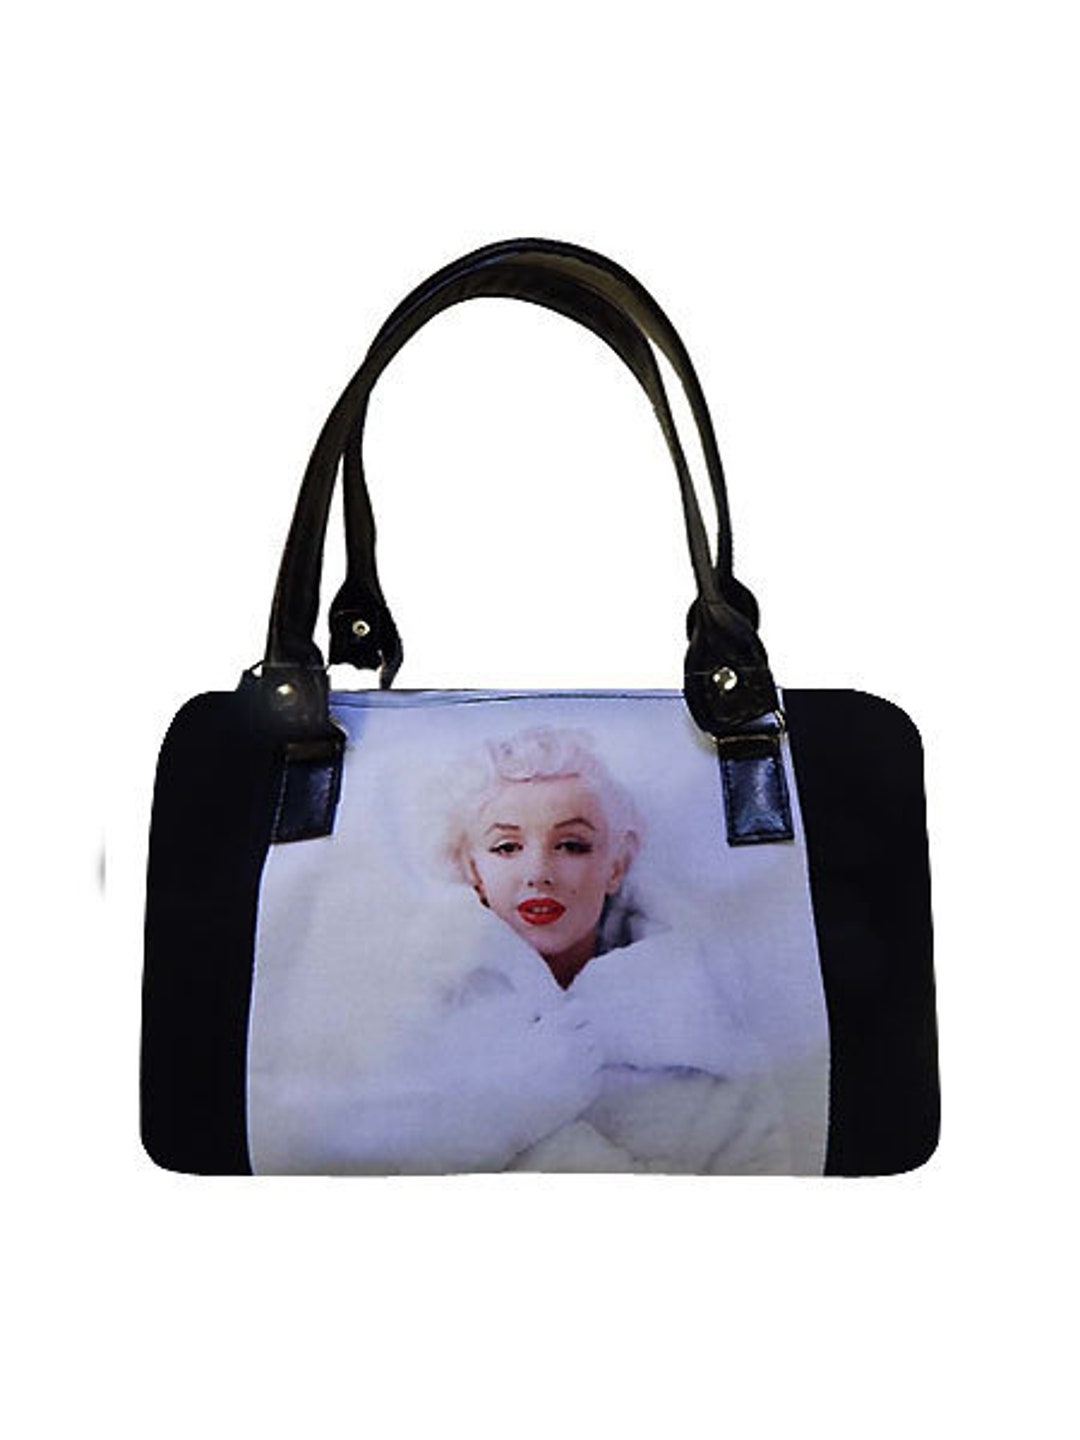 US Handmade Handbag Doctor Bag With marilyn Monroe in 